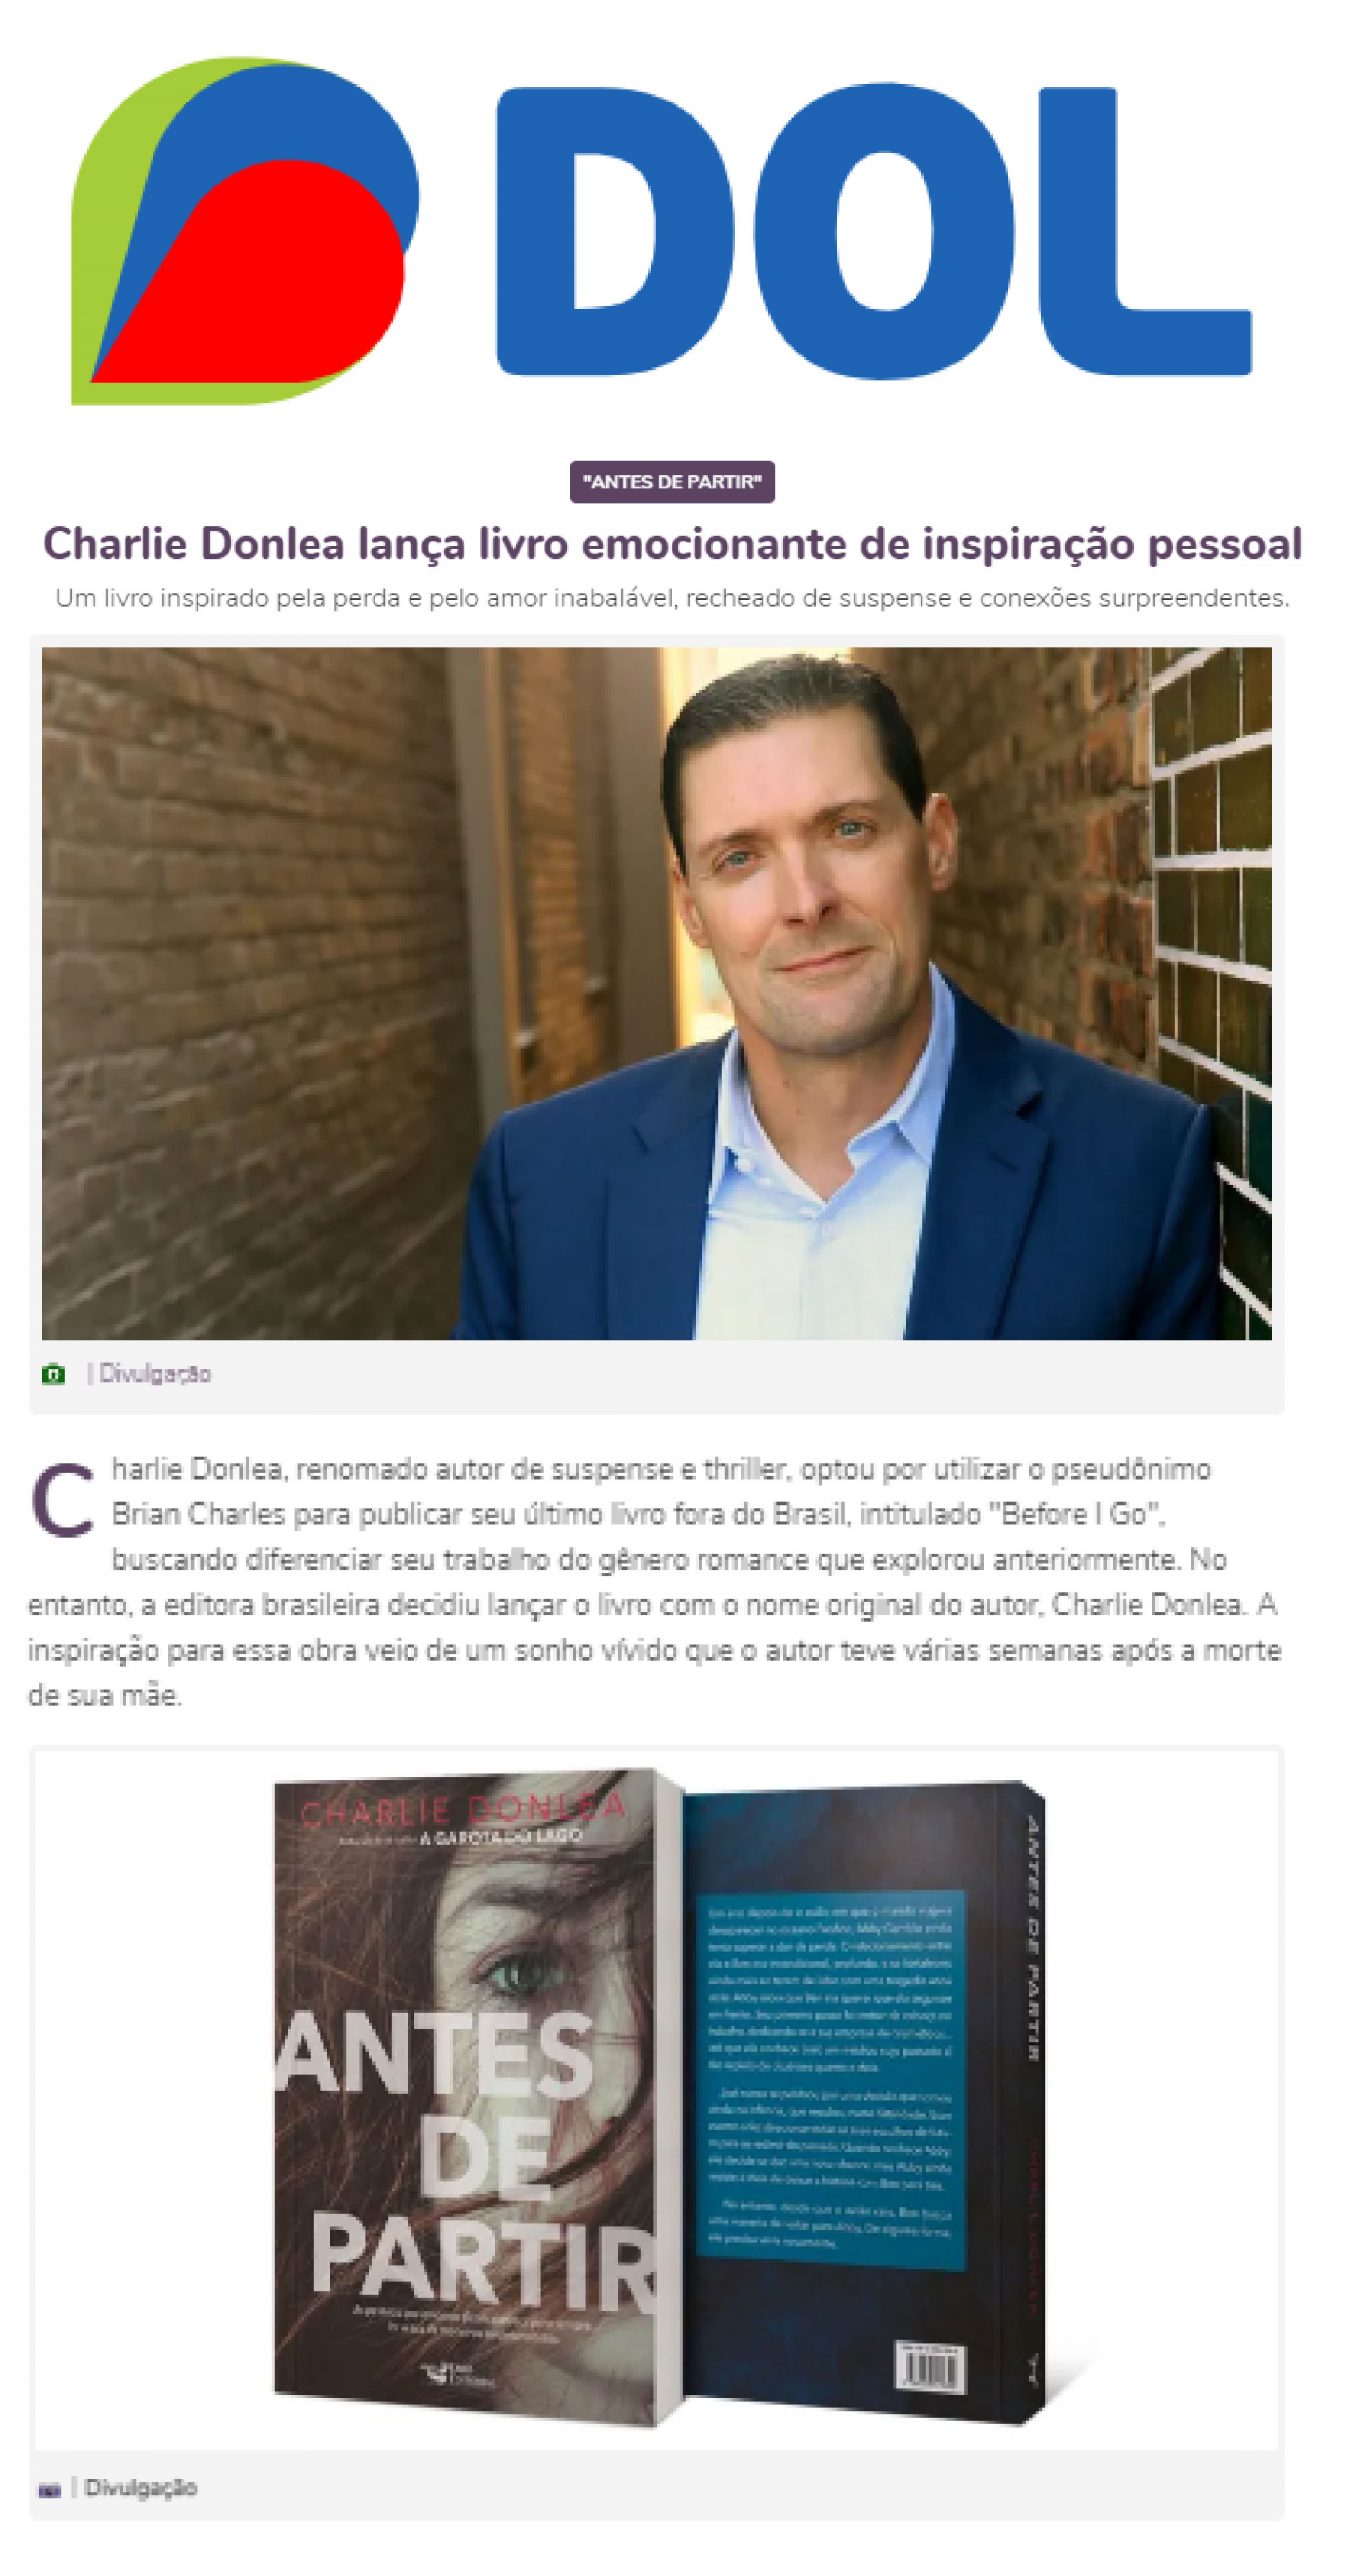 Faro Editorial lança “Os Senhores de Roma”, série de romance histórico do  escritor Allan Massie